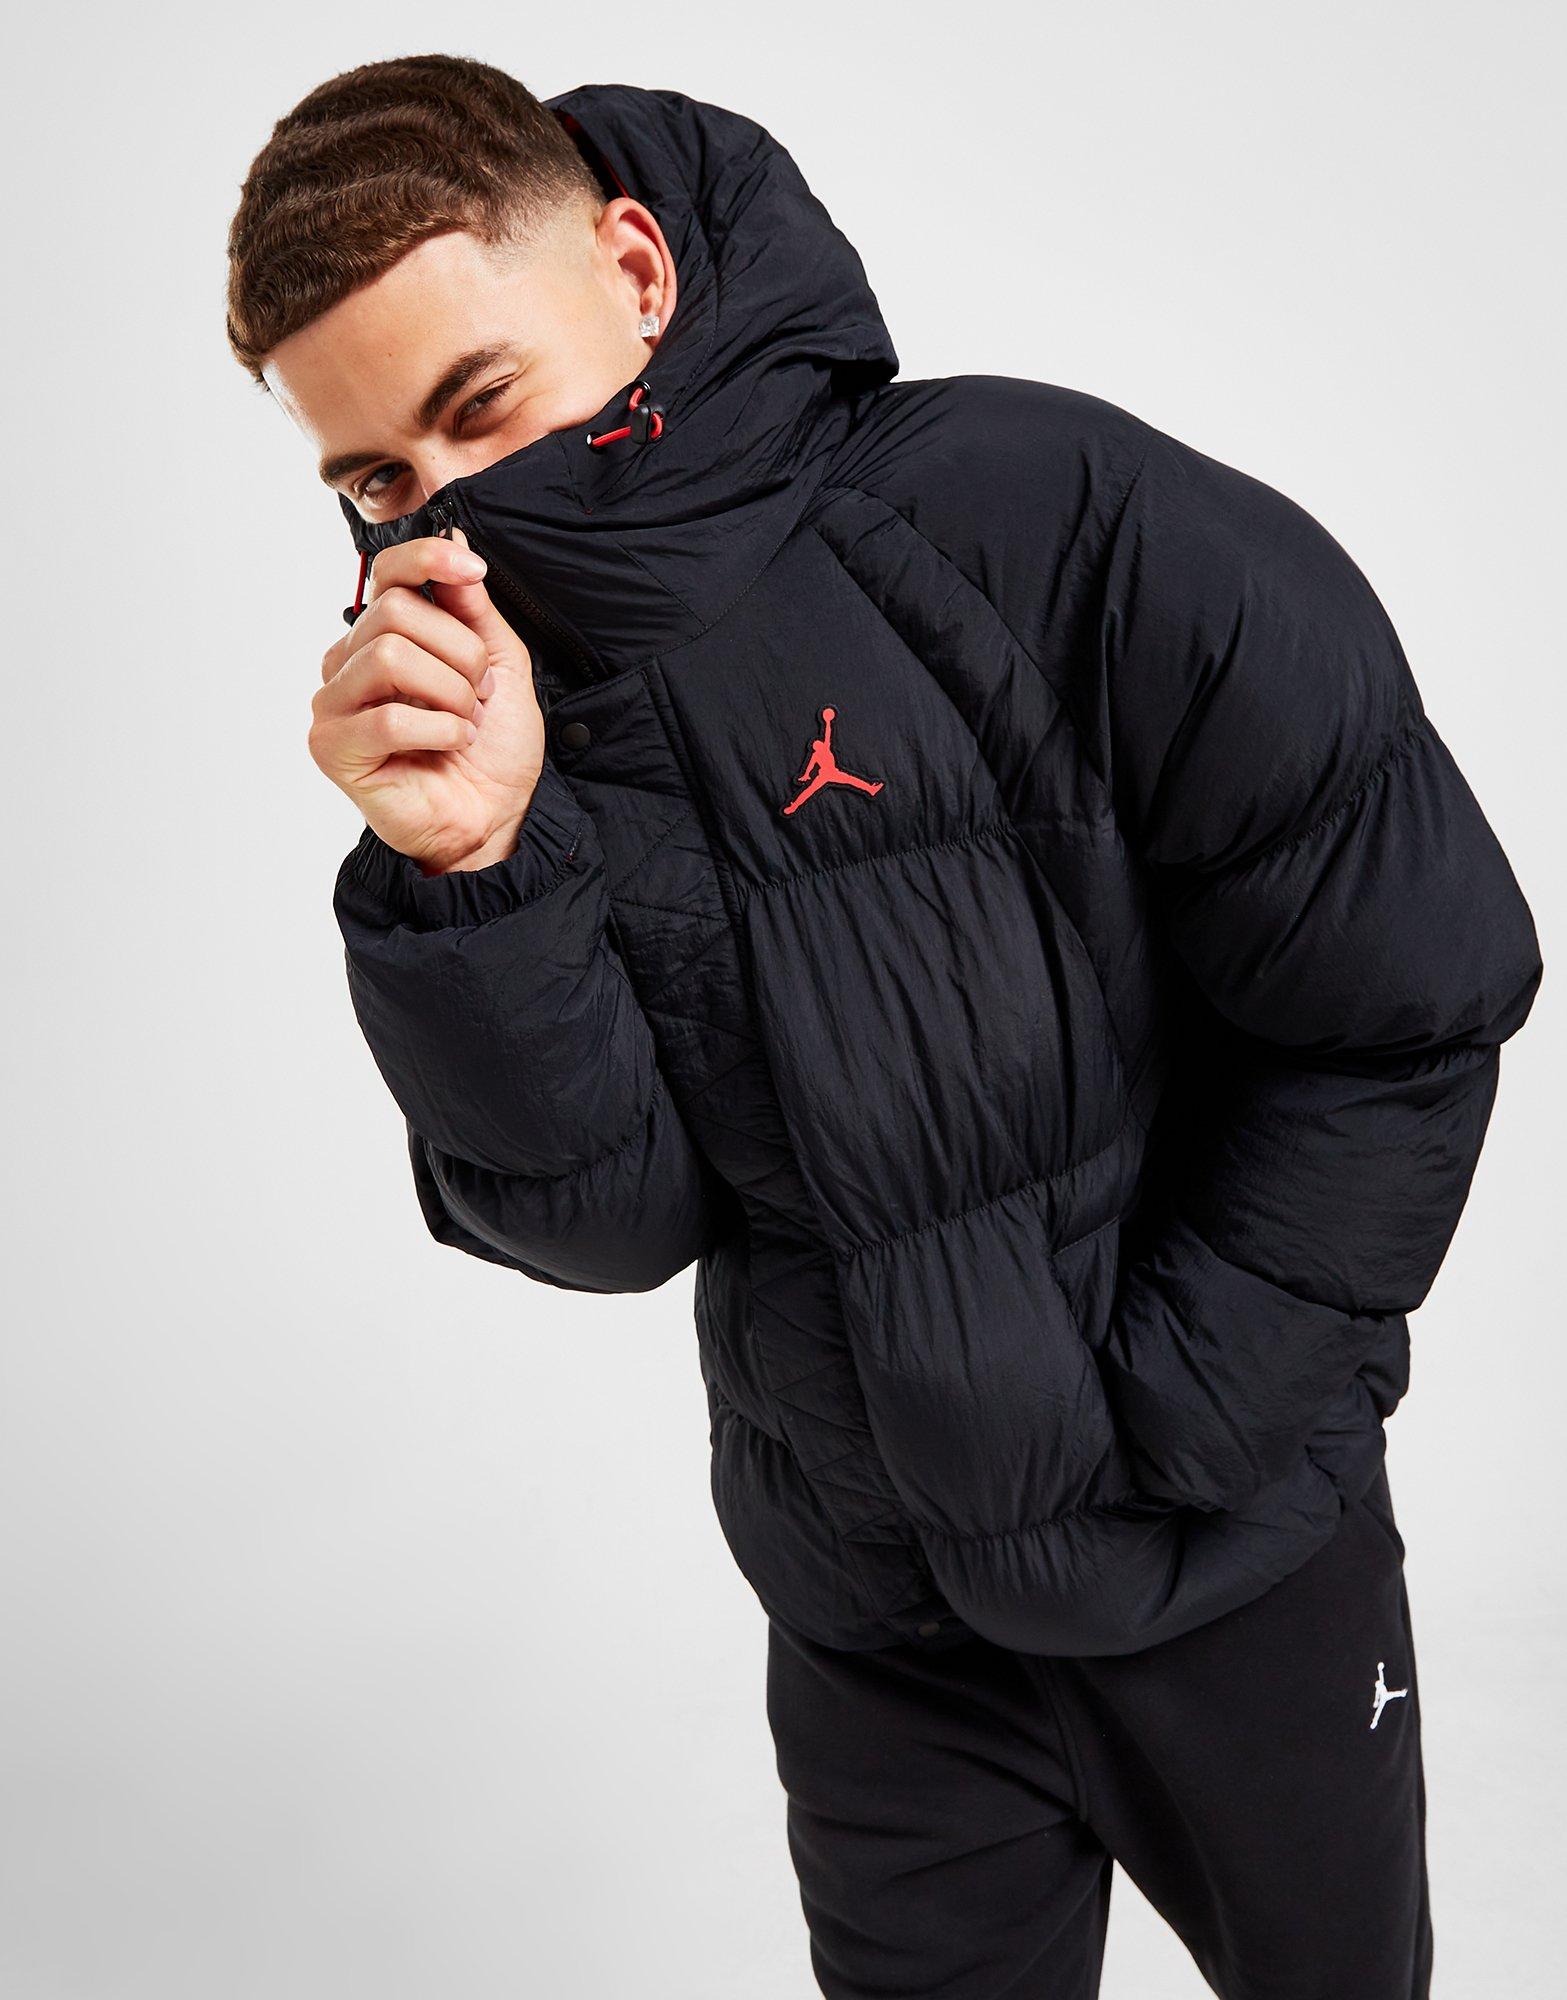 pérdida Decir a un lado monigote de nieve Jordan chaqueta Essential Padded en Negro | JD Sports España